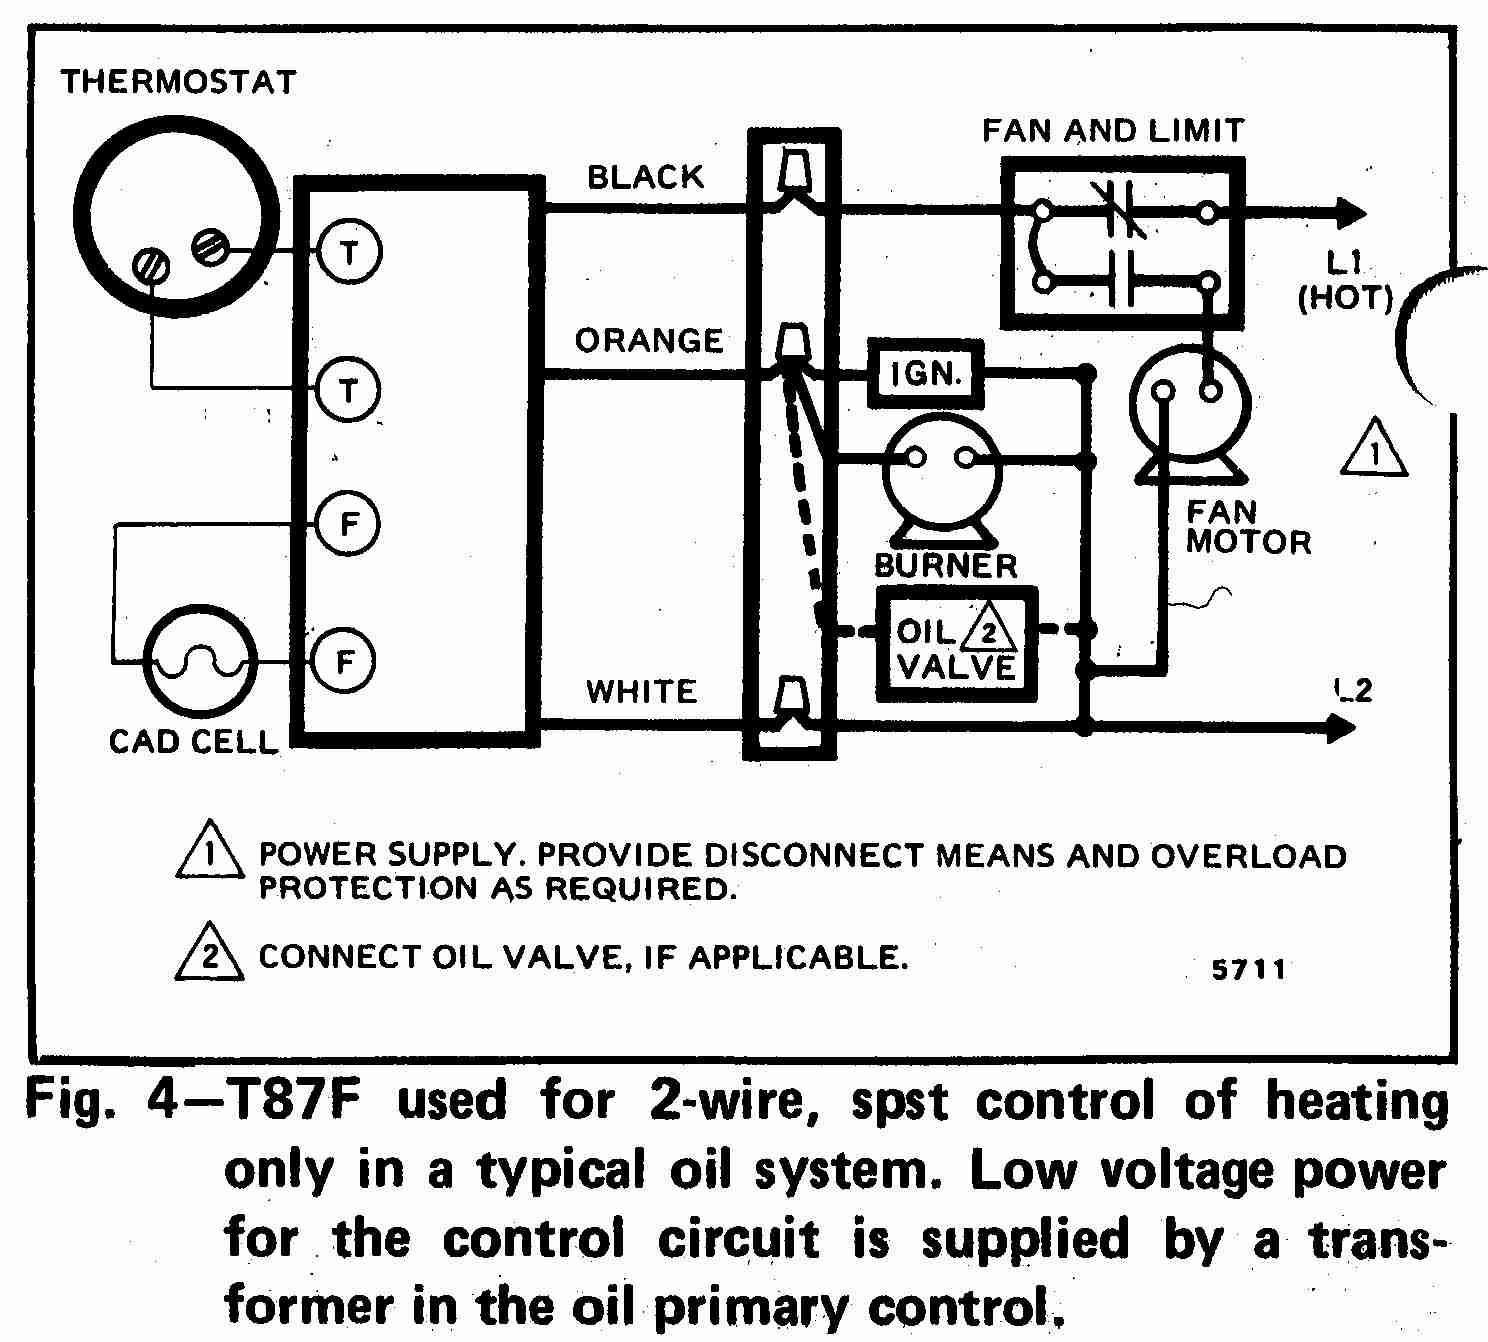 Honeywell Thermostat Low Voltage Wiring Diagram - Wiring Diagram - Honeywell Thermostat Wiring Diagram